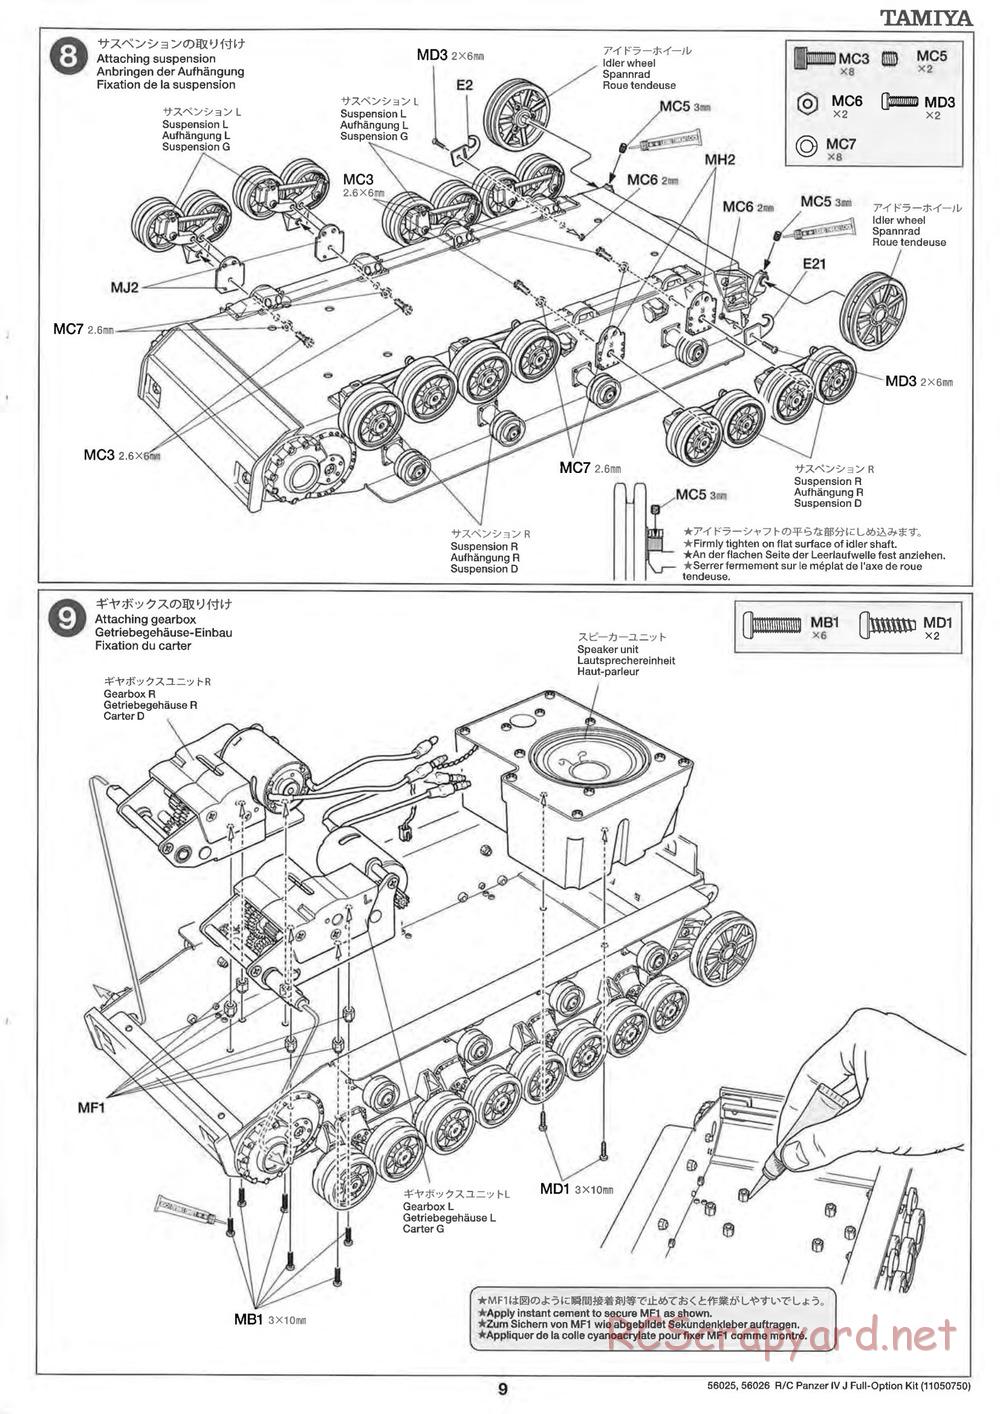 Tamiya - Panzerkampfwagen IV Ausf.J - 1/16 Scale Chassis - Manual - Page 9